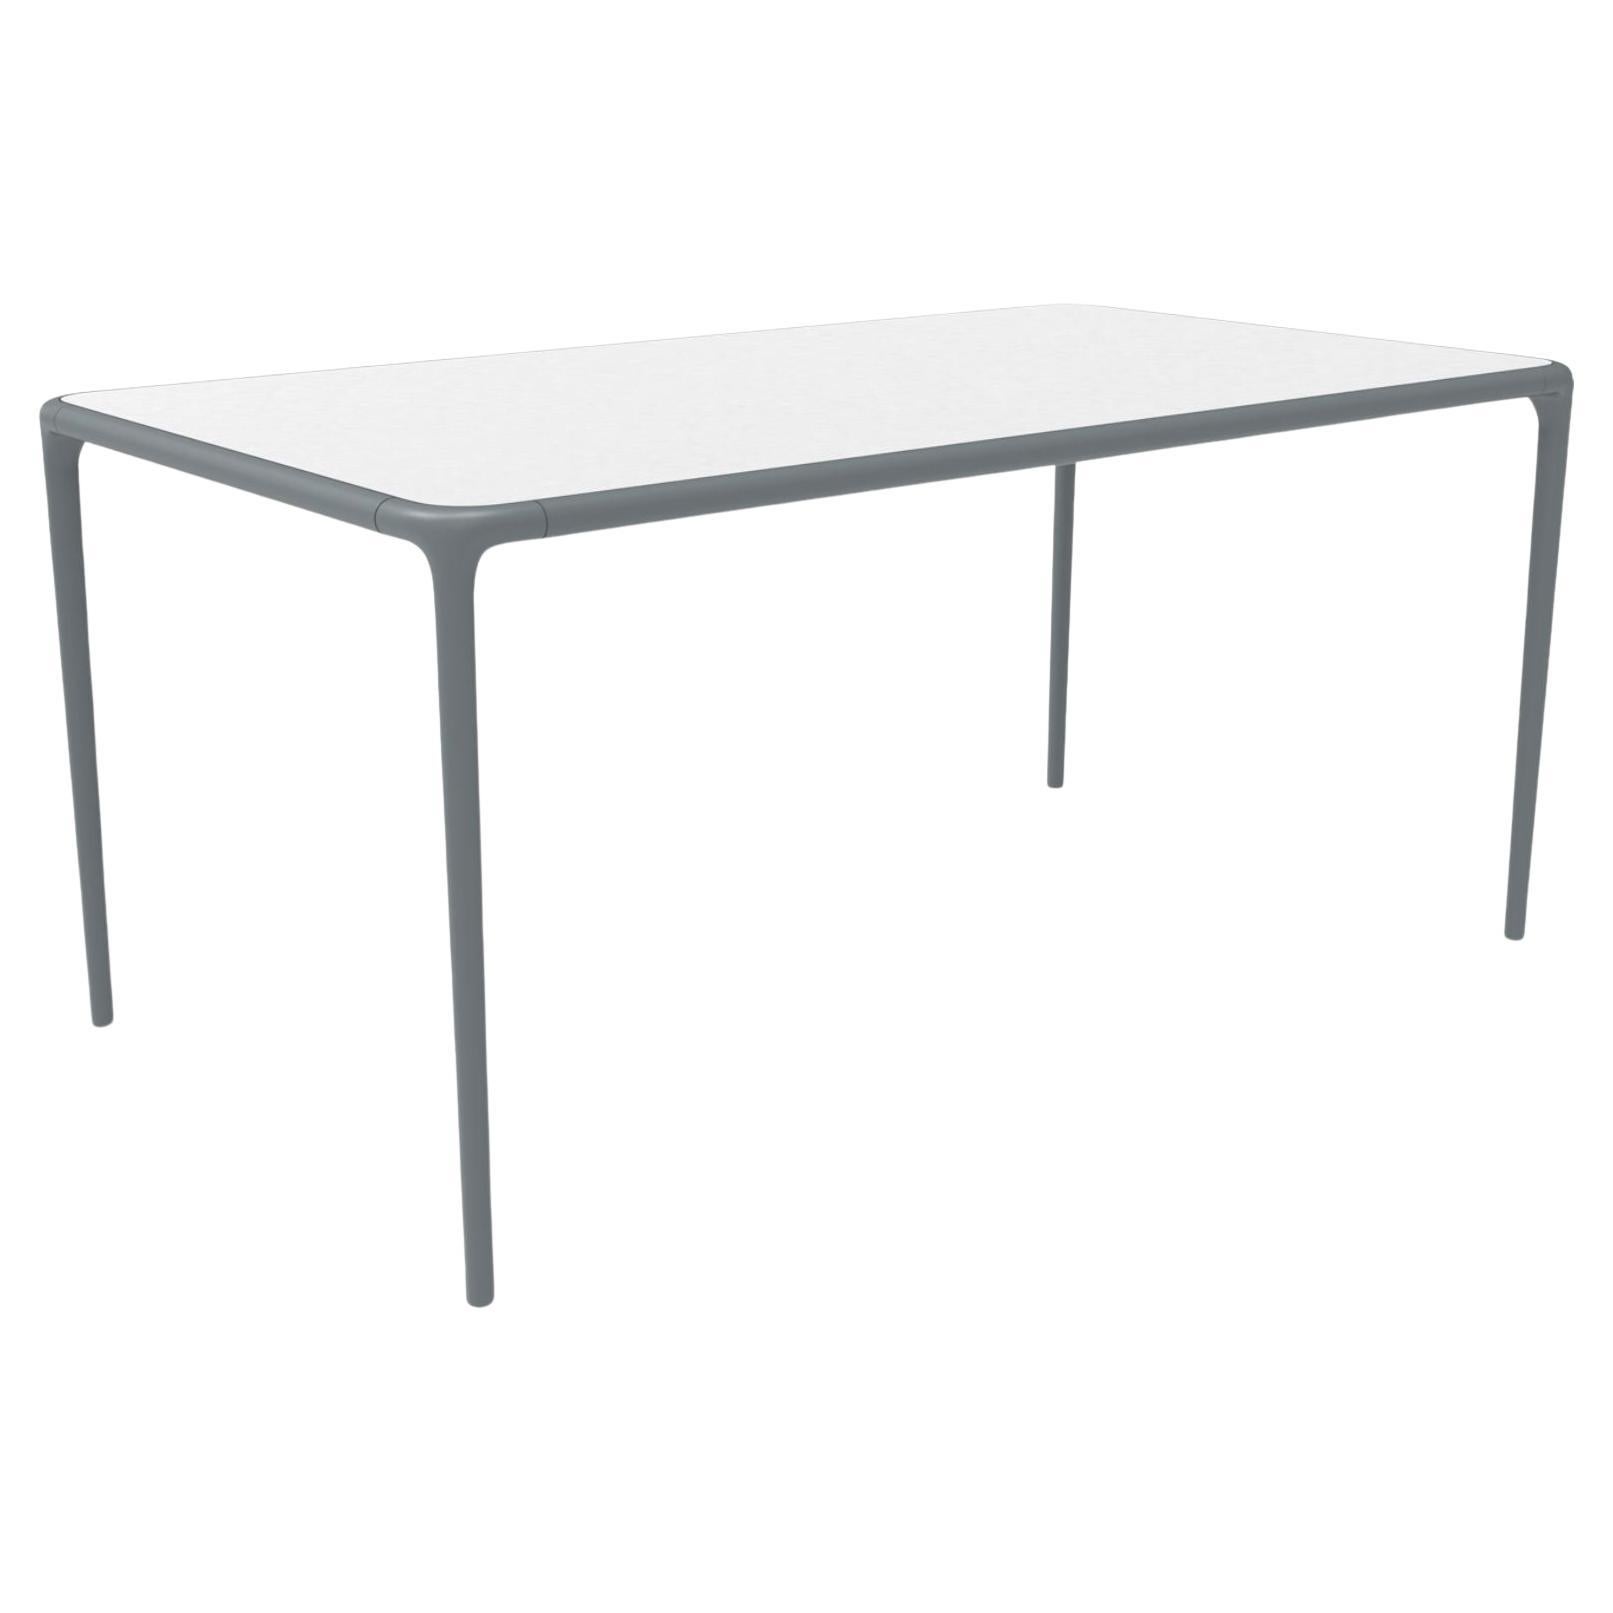 Xaloc Grey Glass Top Table 160 by Mowee